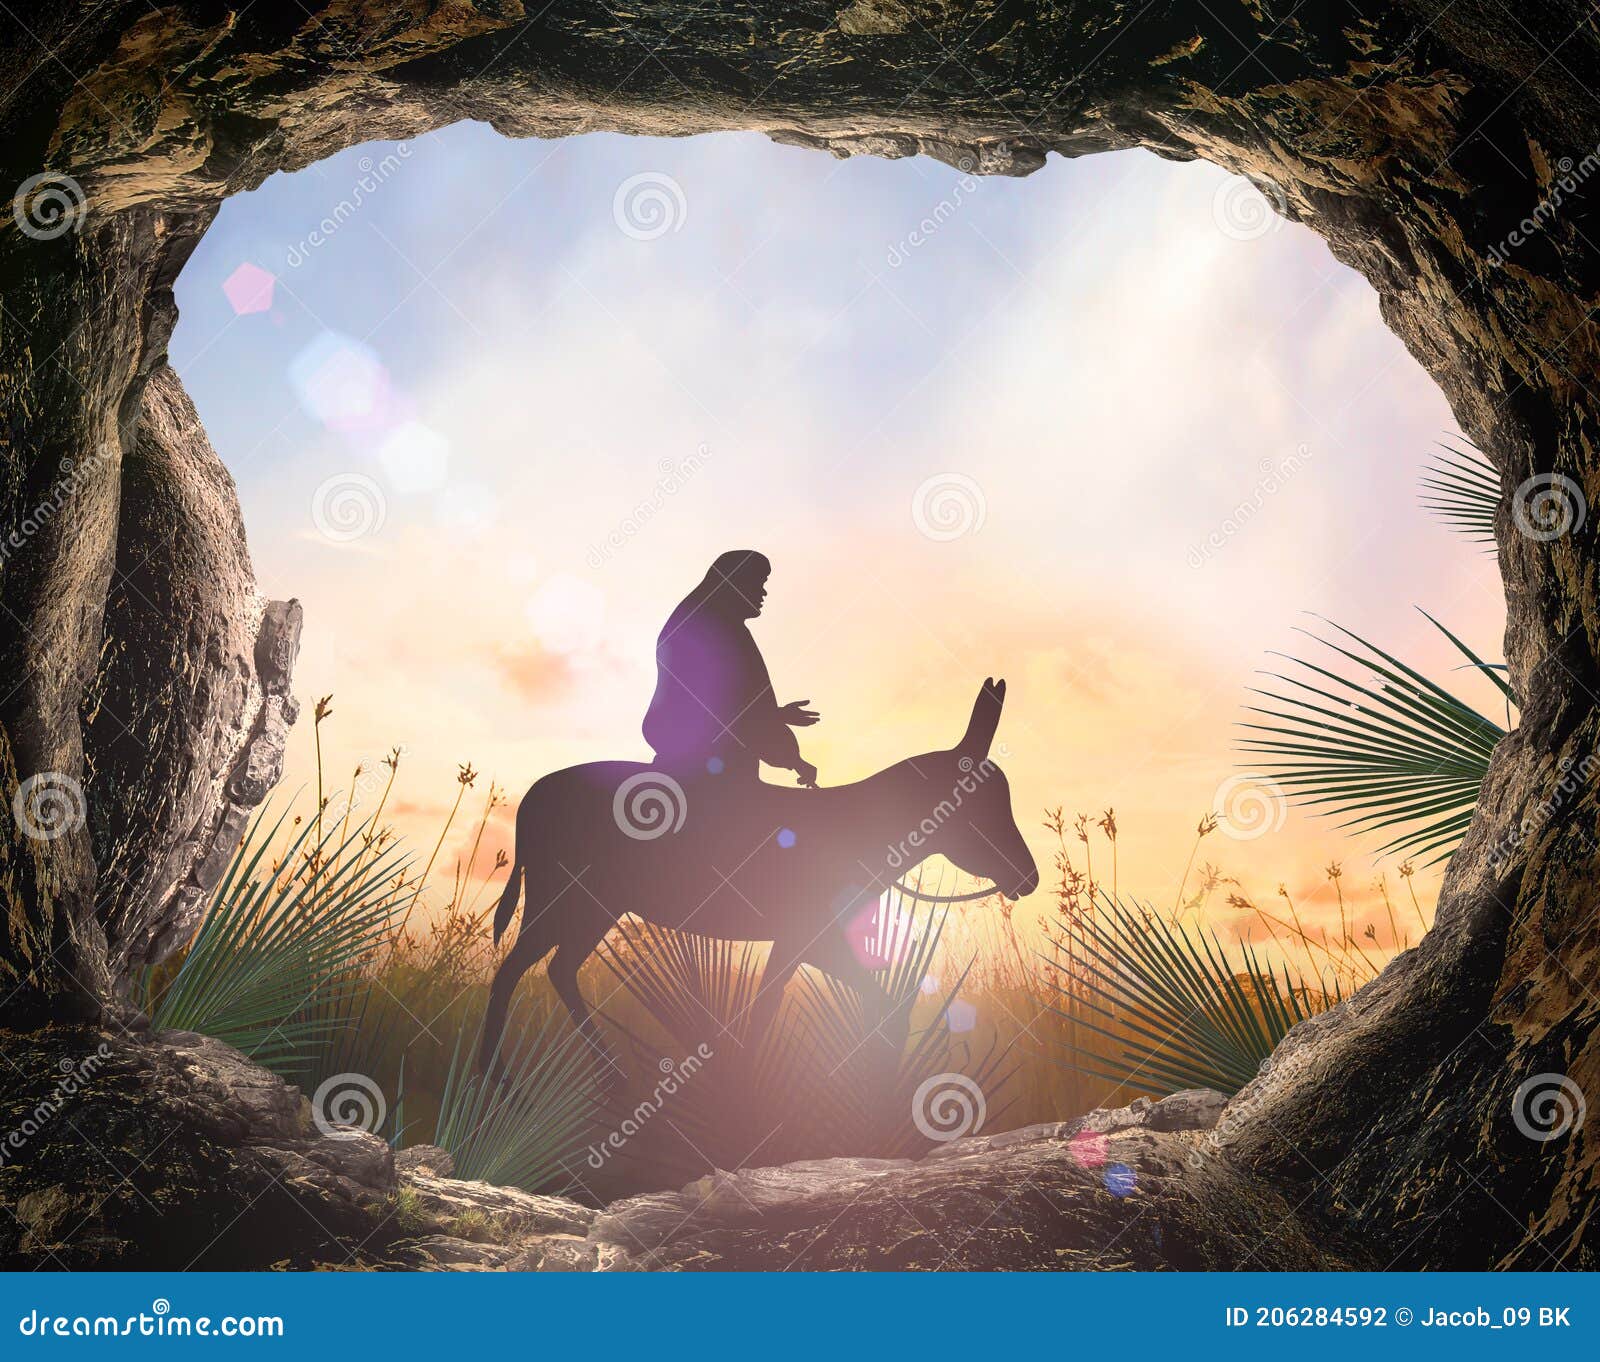 jesus christ riding donkey with tomb stone